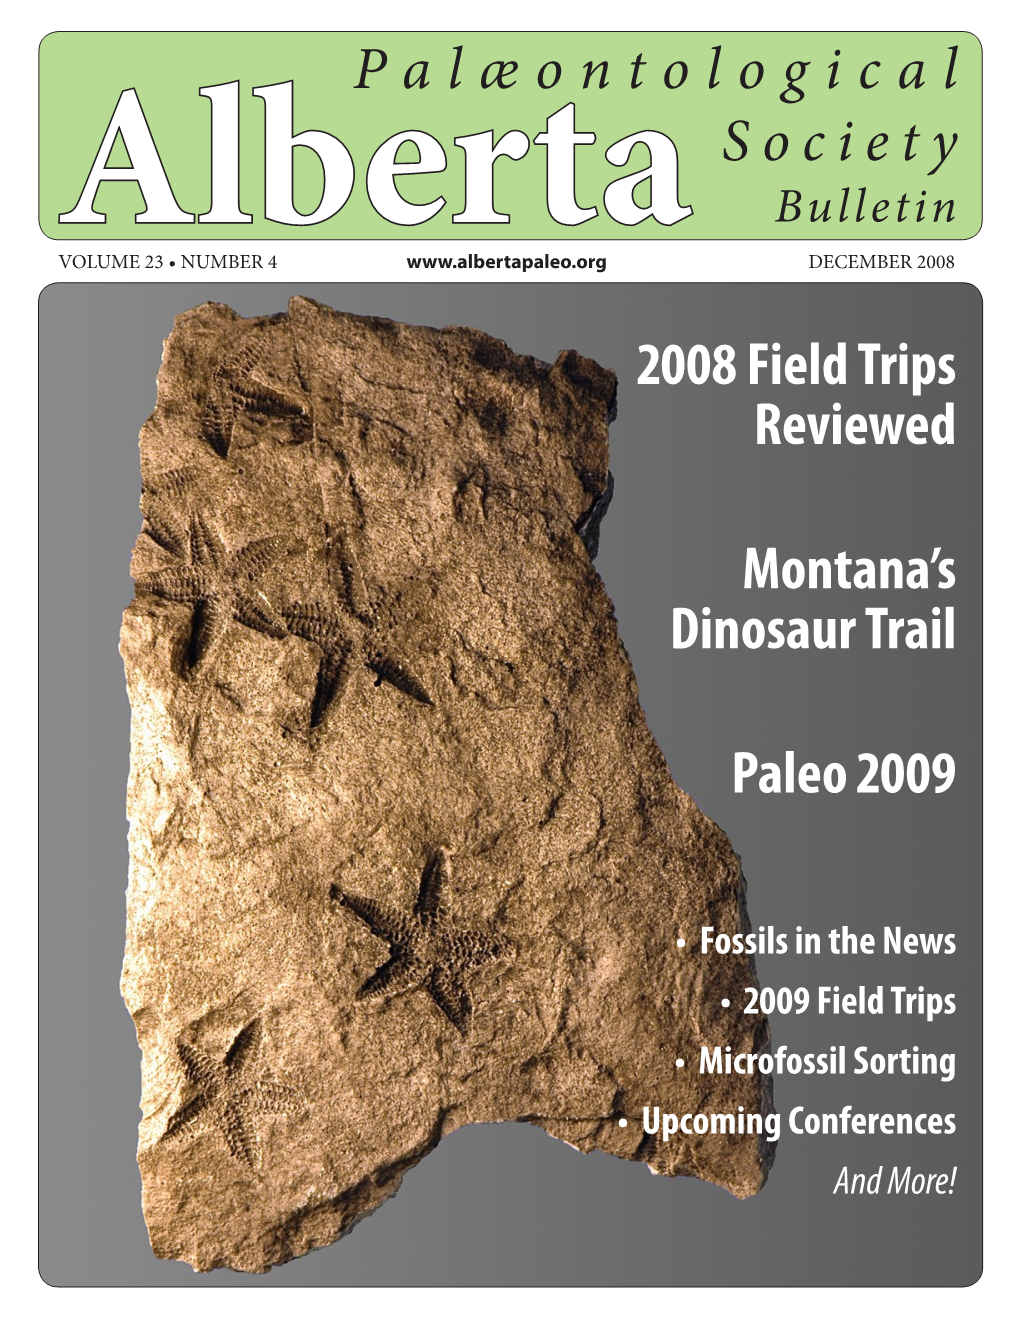 Palæontological Society 2008 Field Trips Reviewed Paleo 2009